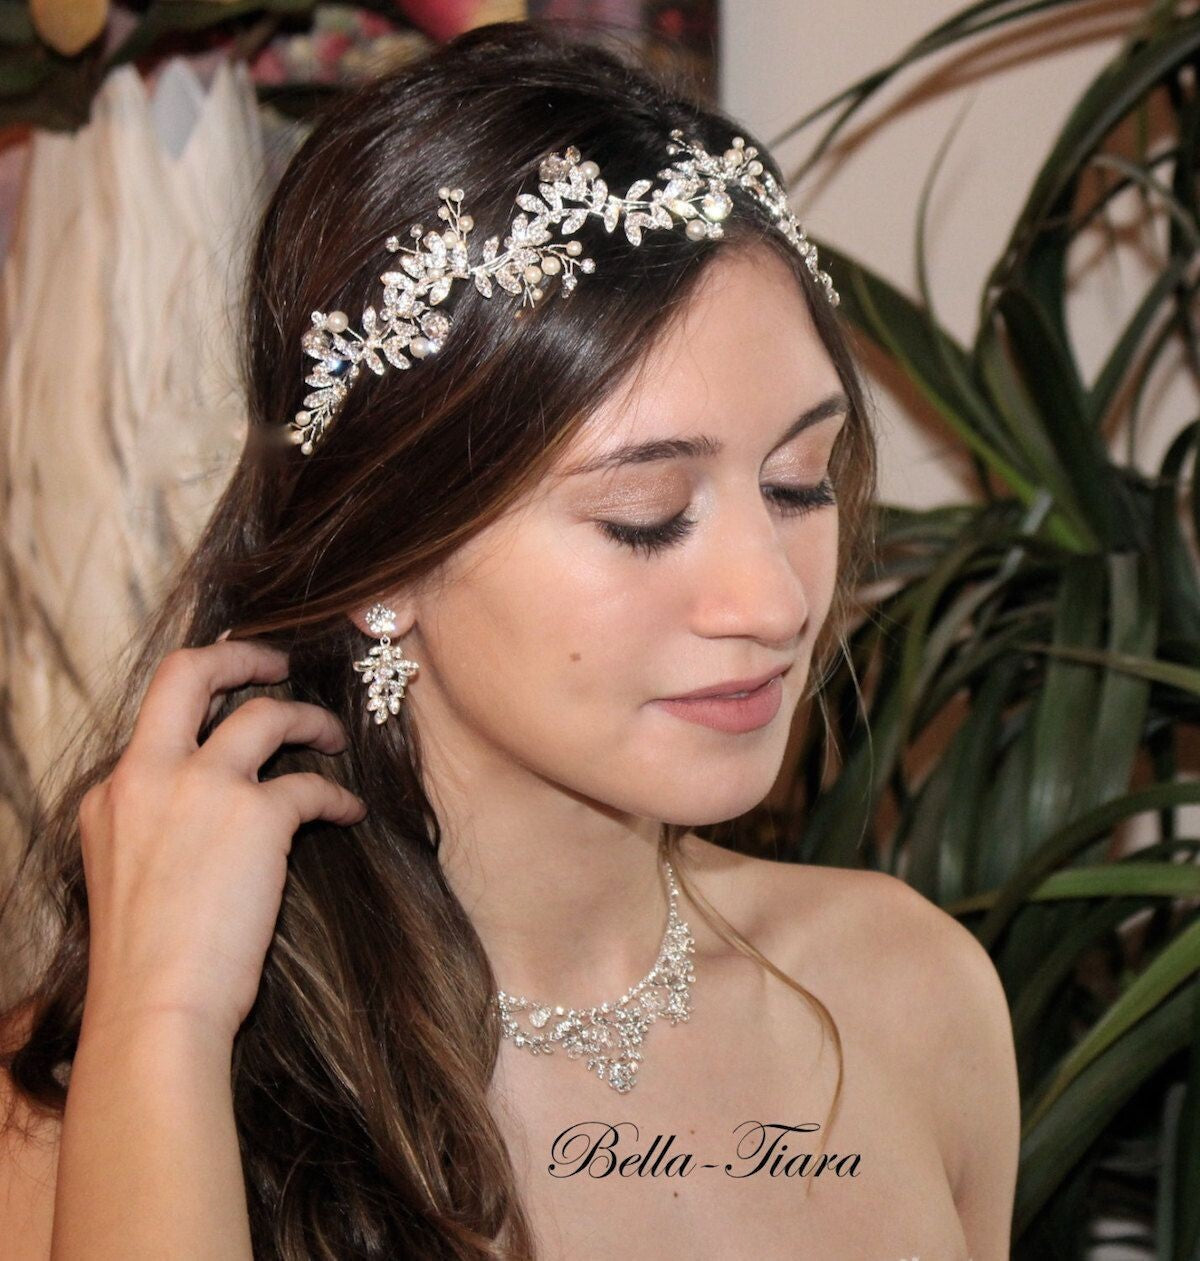 Vianna - Beautiful Pearl and Crystal headband